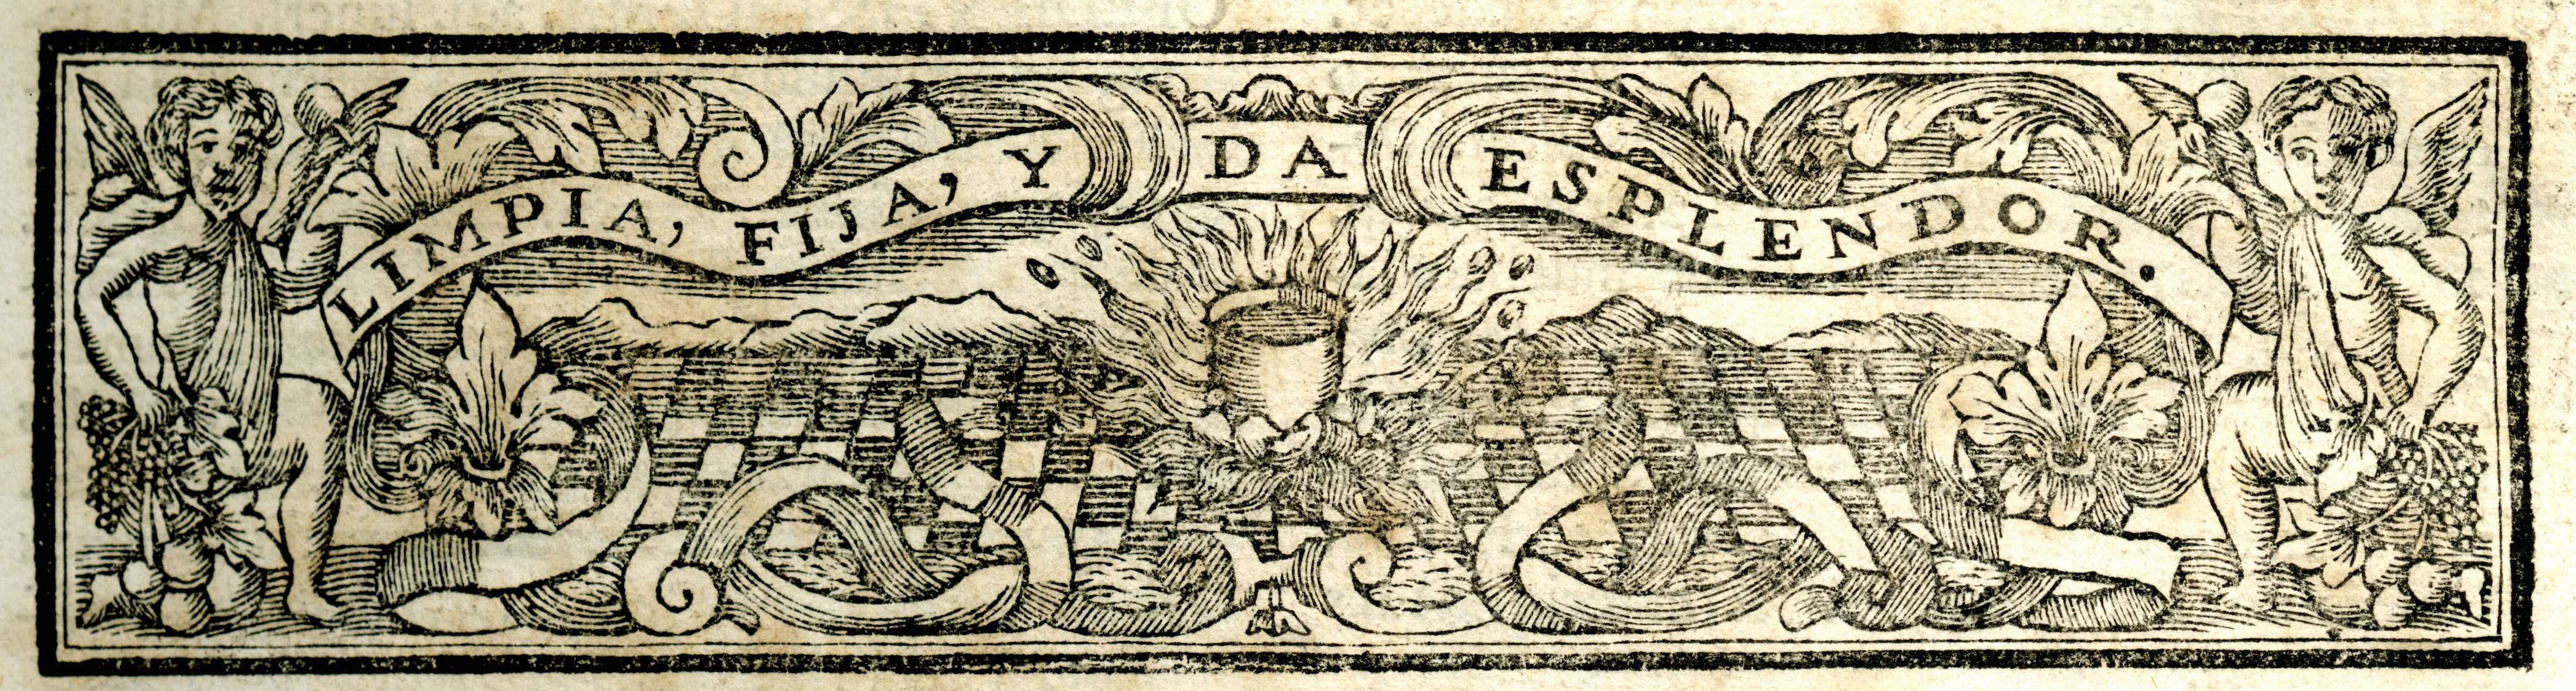 Lema de la Real Academia de la Lengua Española en 1737